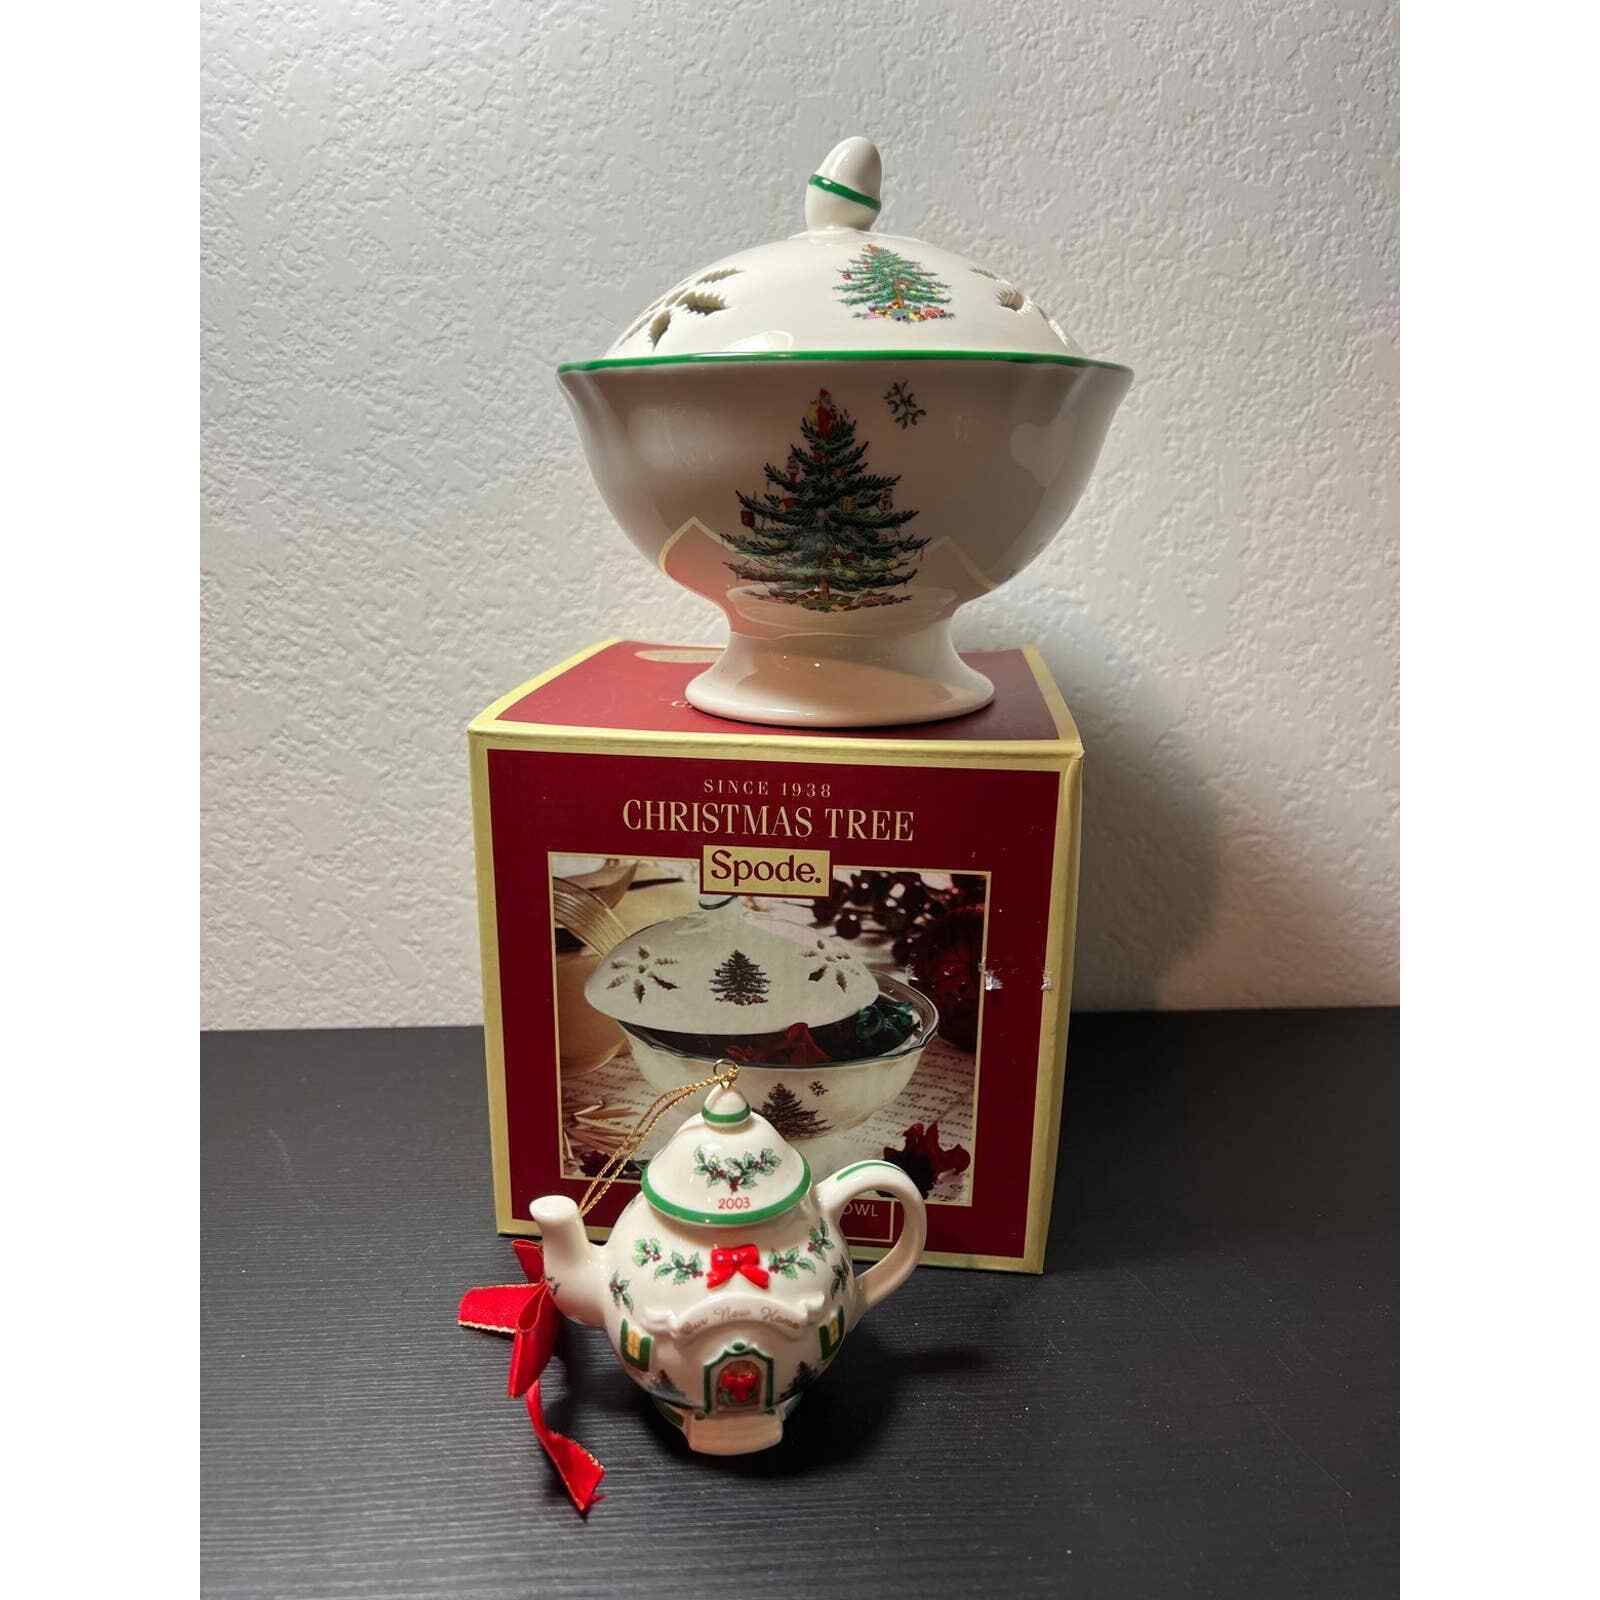 Spode Teapot Ornament Potpourri Bowl Christmas Tree Extra Holiday Decor - $28.71